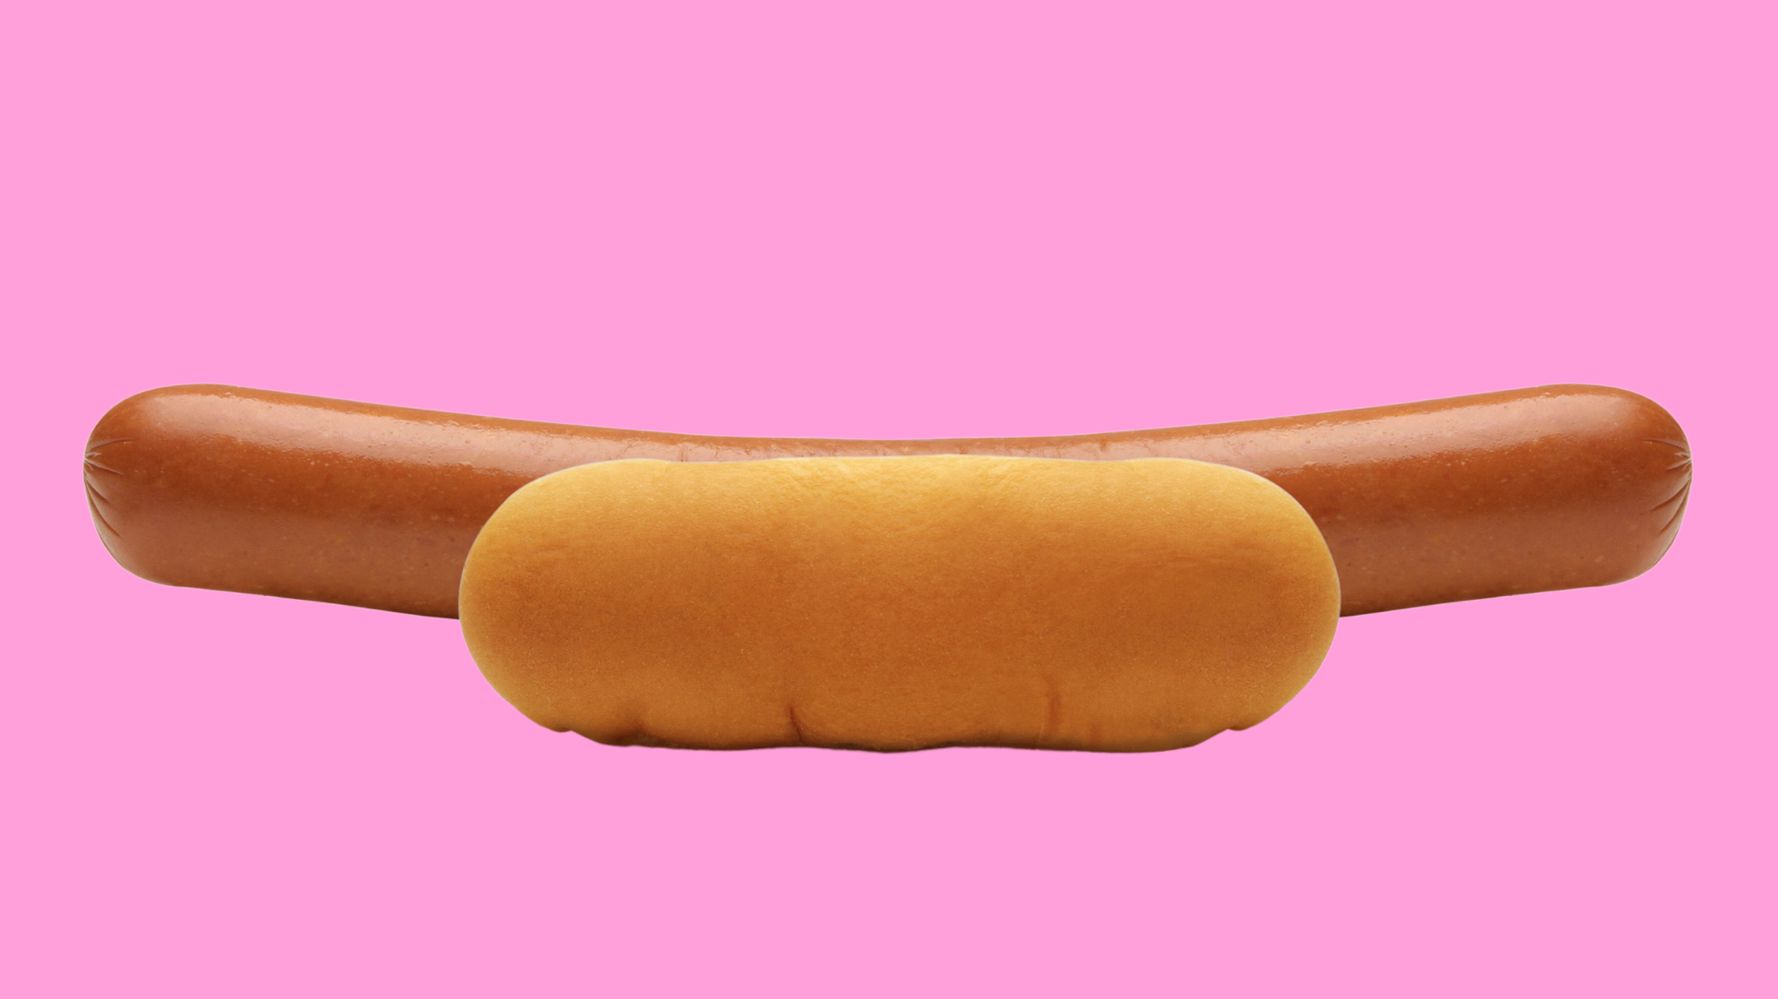 make Vienna Sausage Hot Dogs 